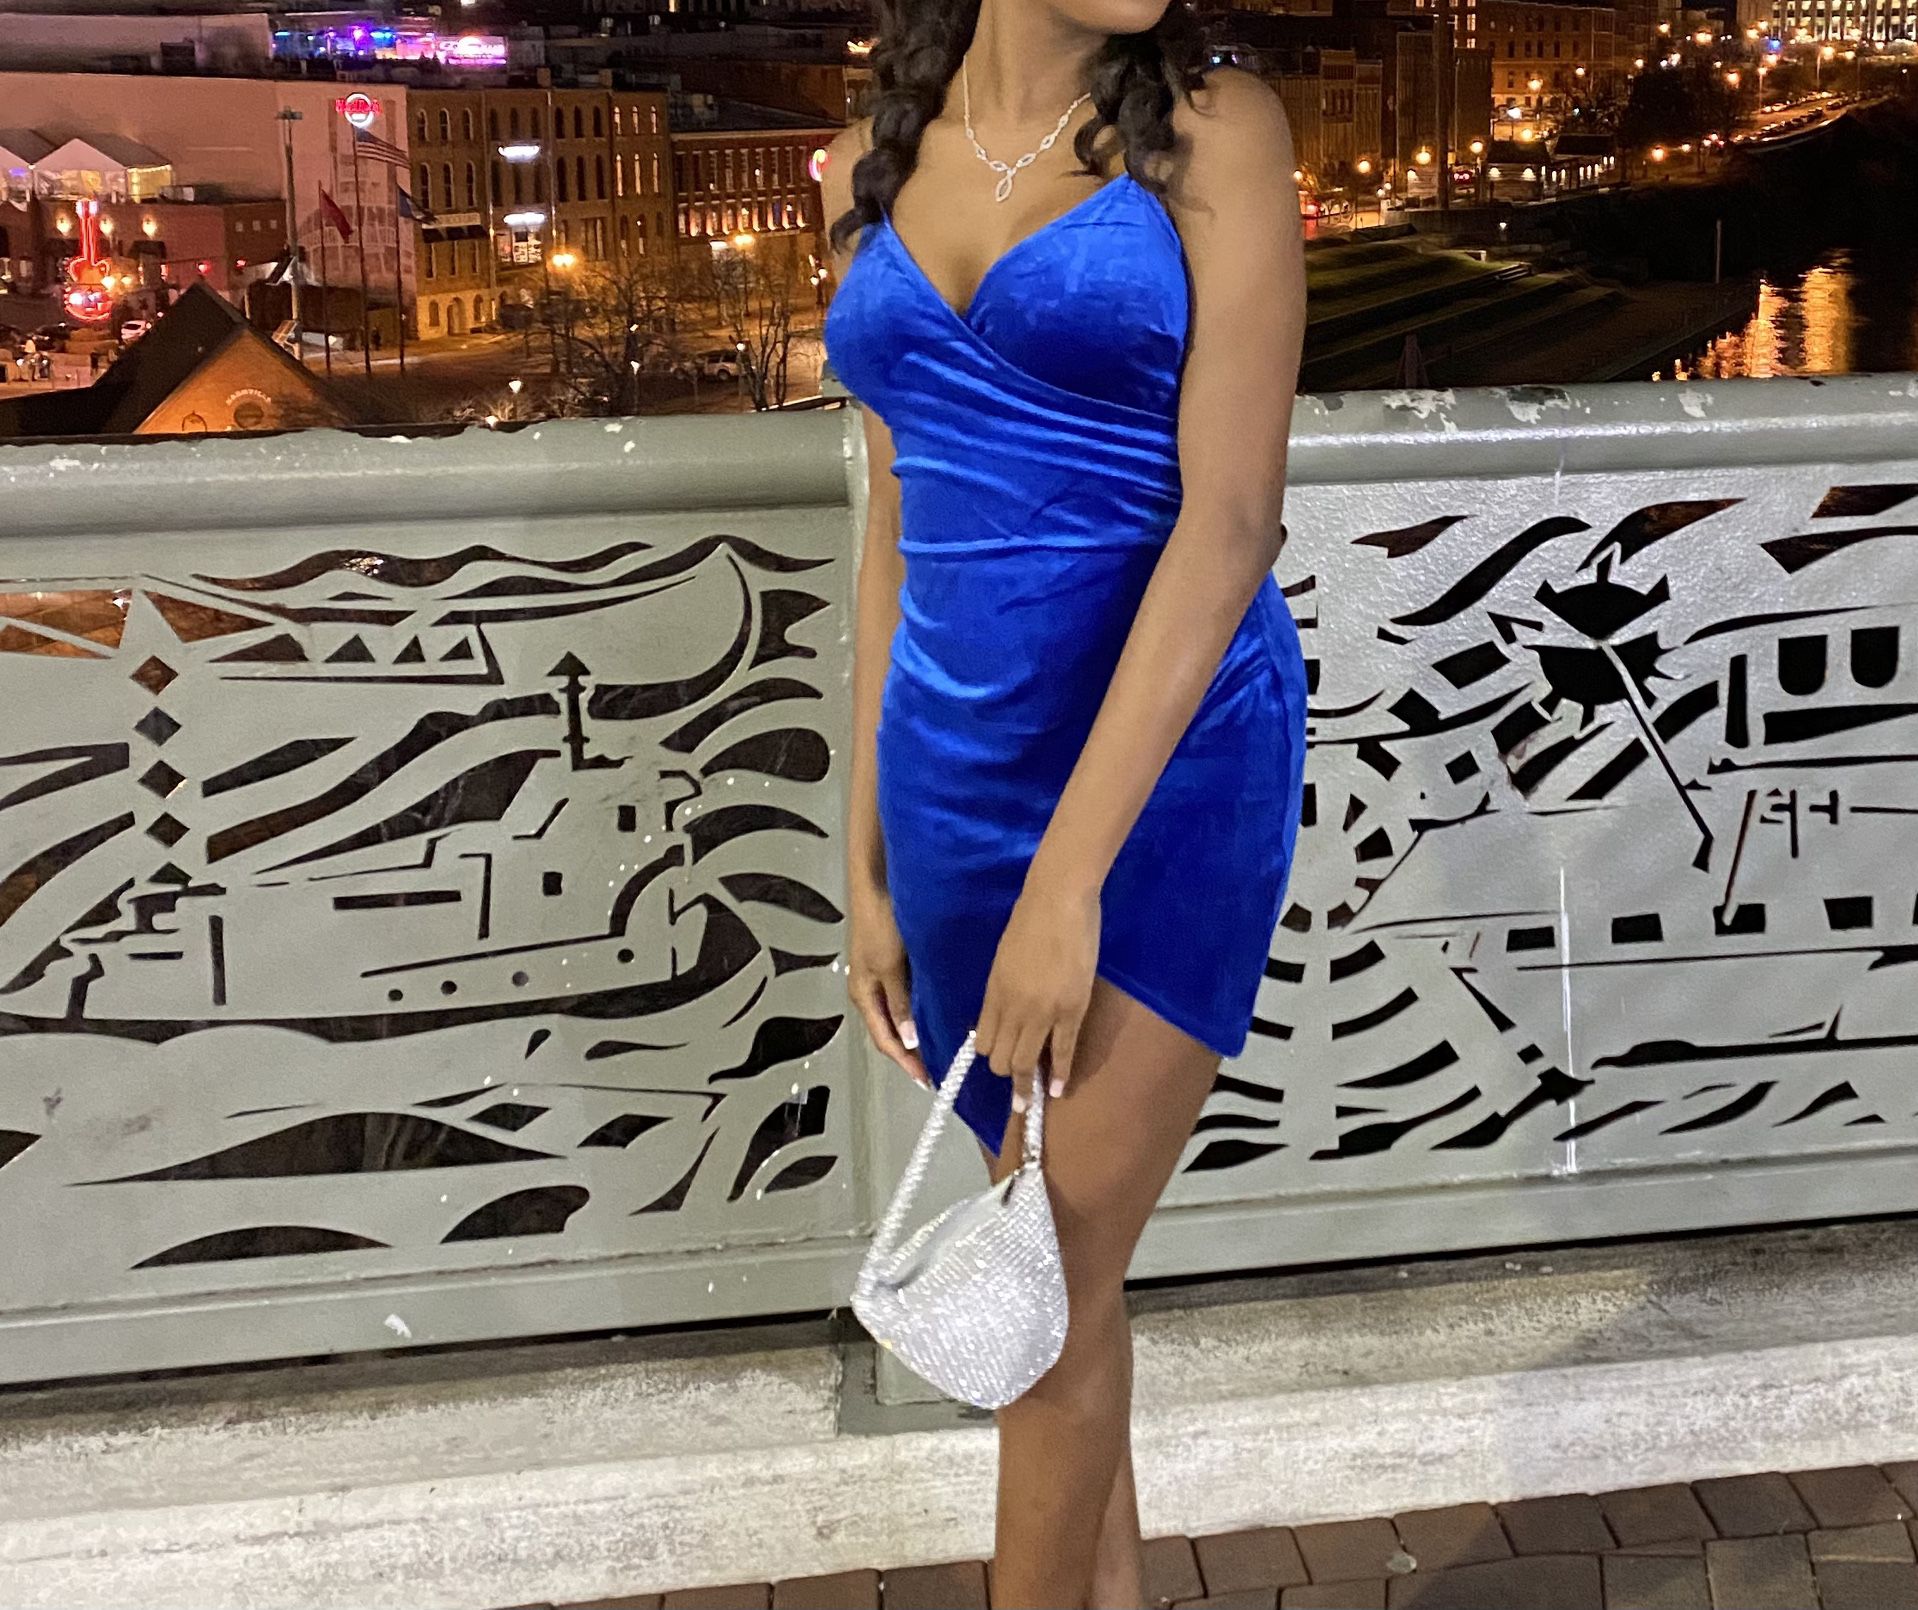 Blue Homecoming Dress